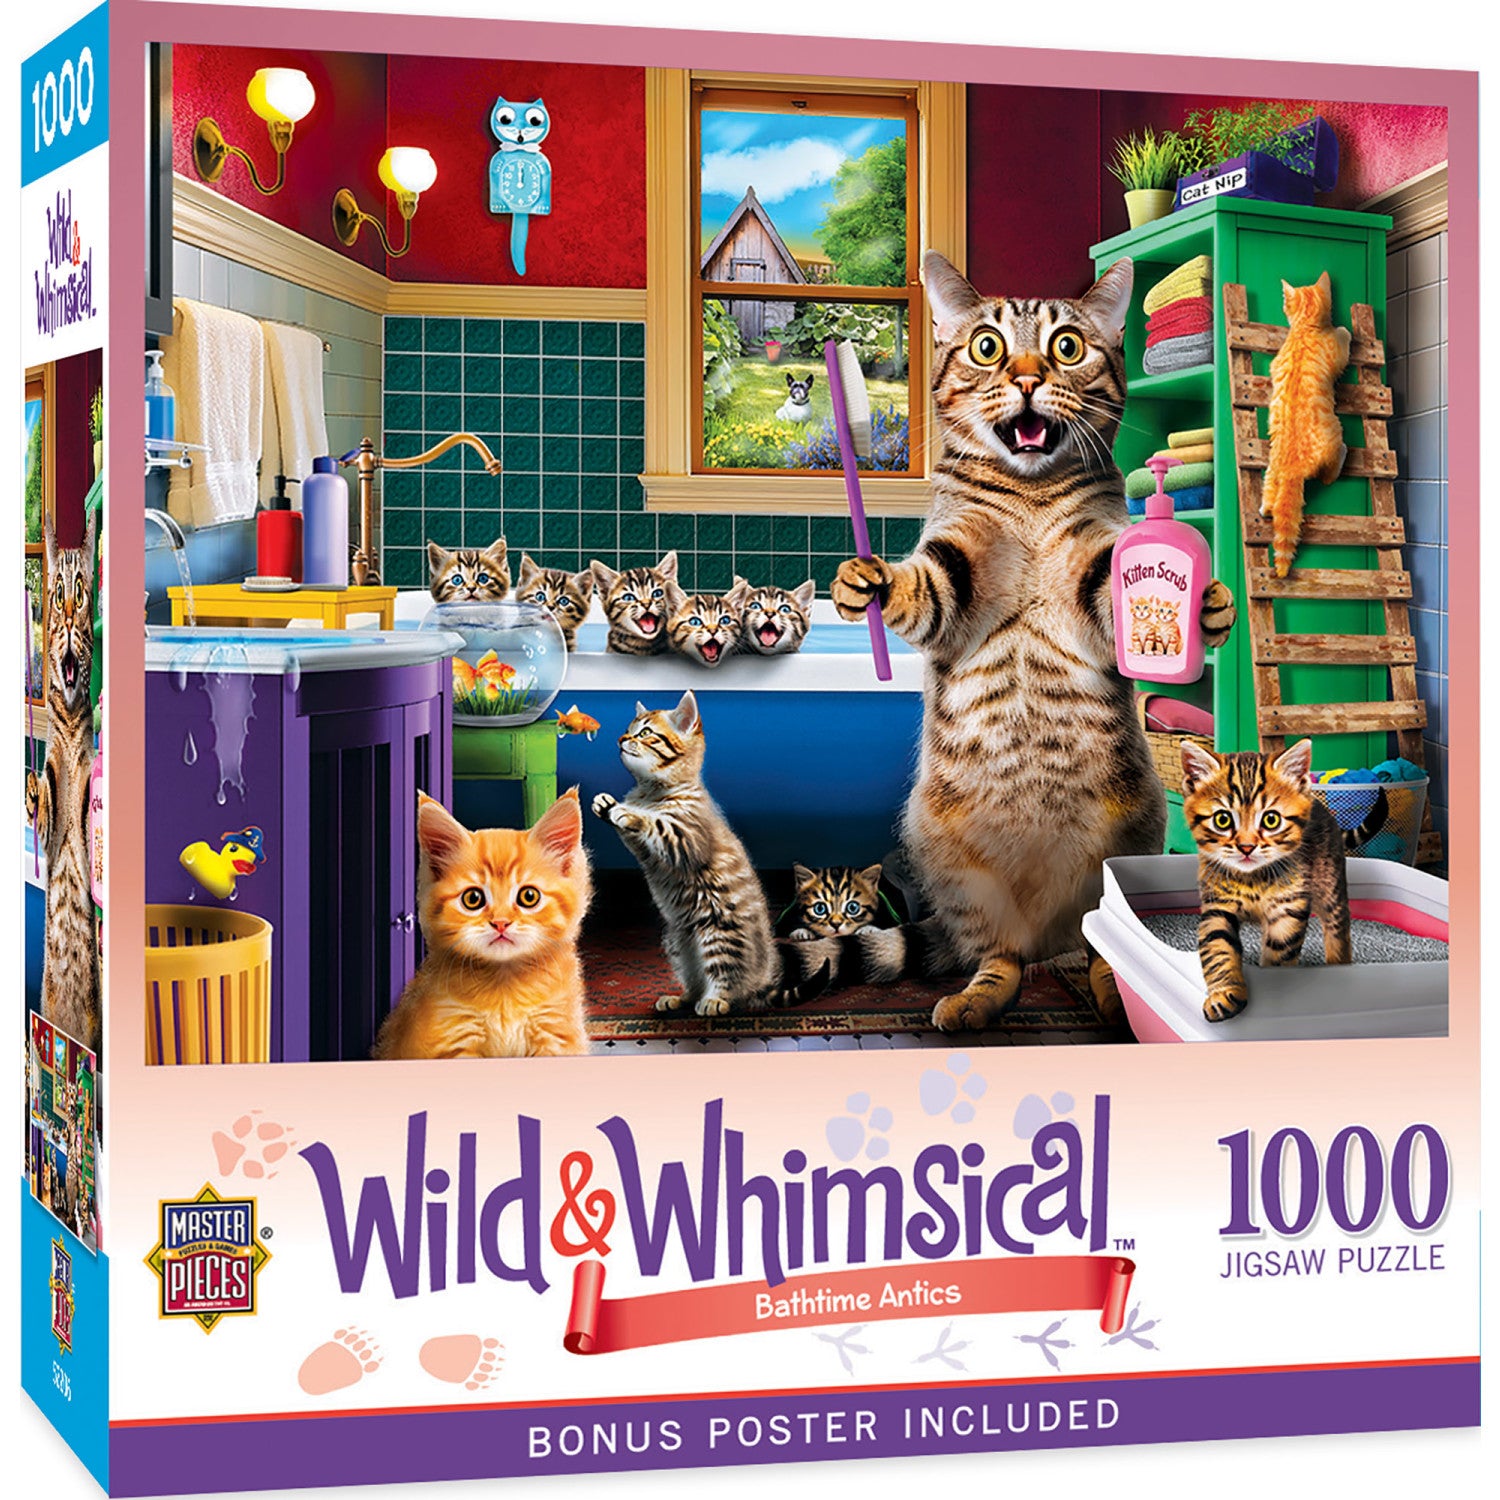 Wild & Whimsical - Bathtime Antics 1000 Piece Jigsaw Puzzle